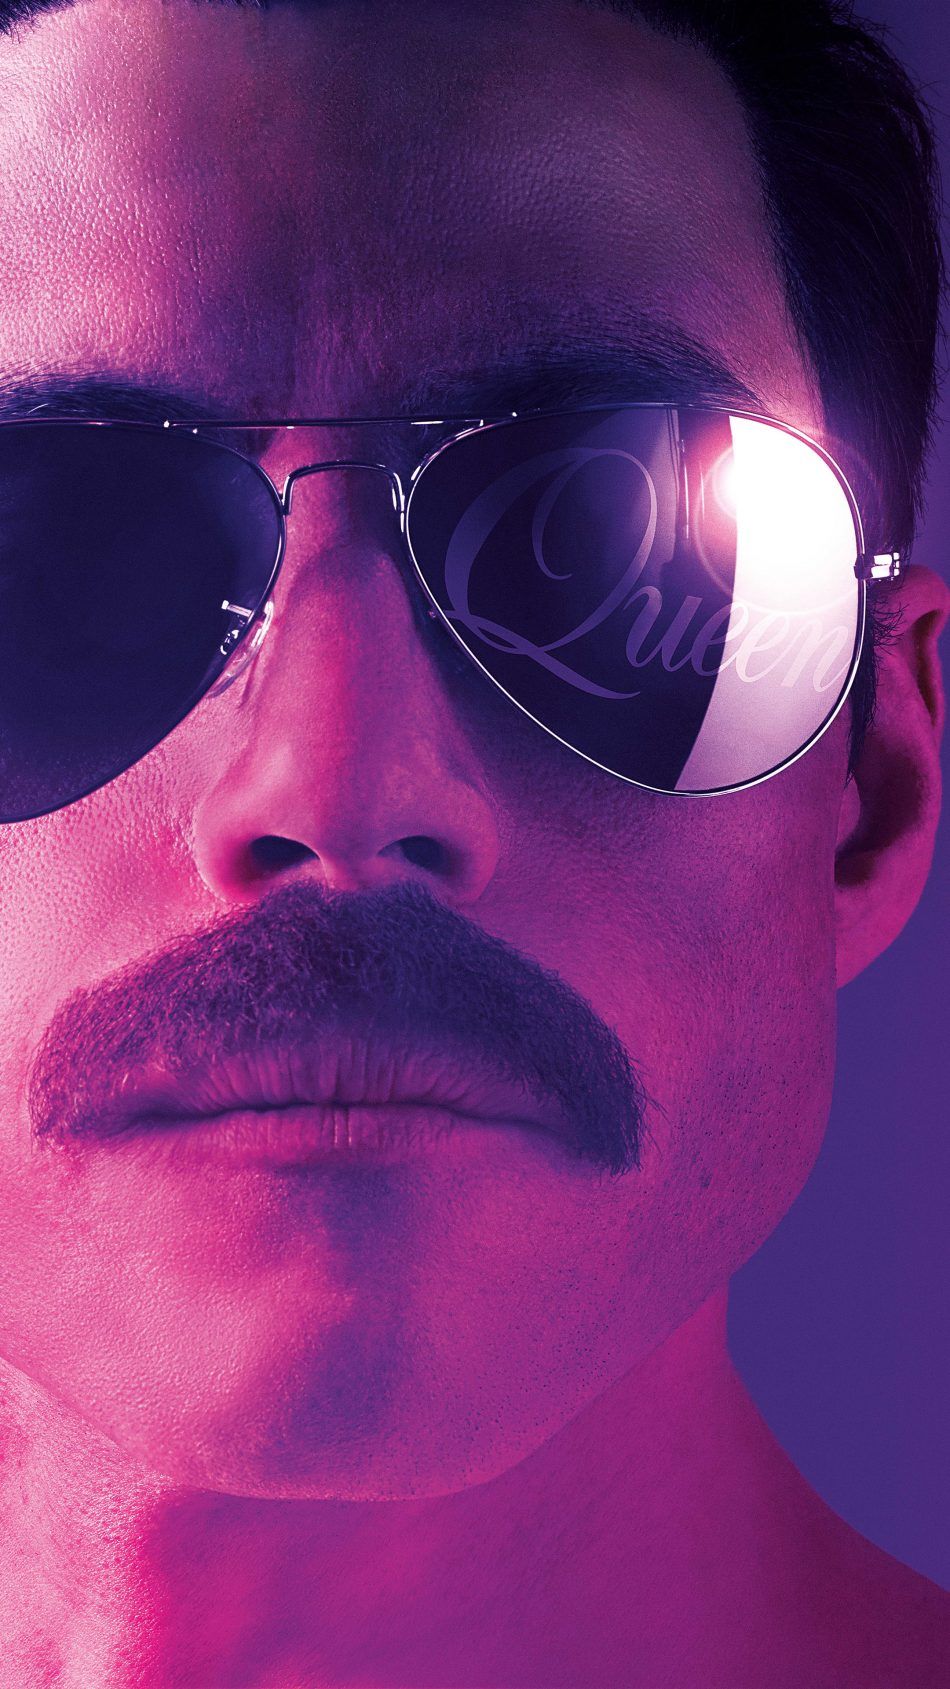 free Bohemian Rhapsody